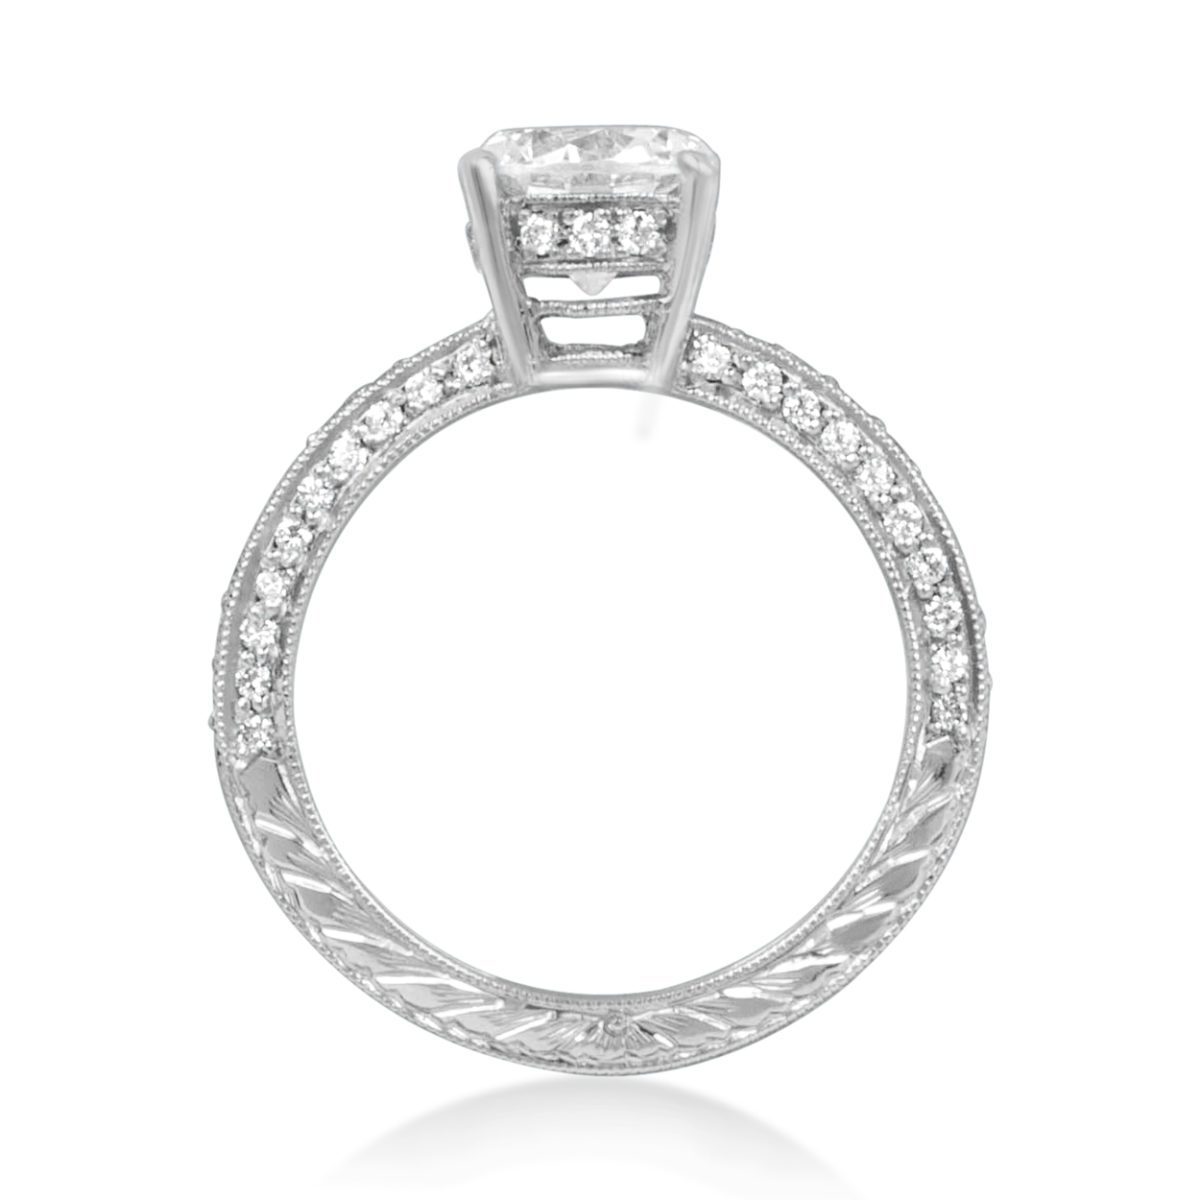 Jack Kelege Three-Sided Diamond Engagement Ring in Platinum